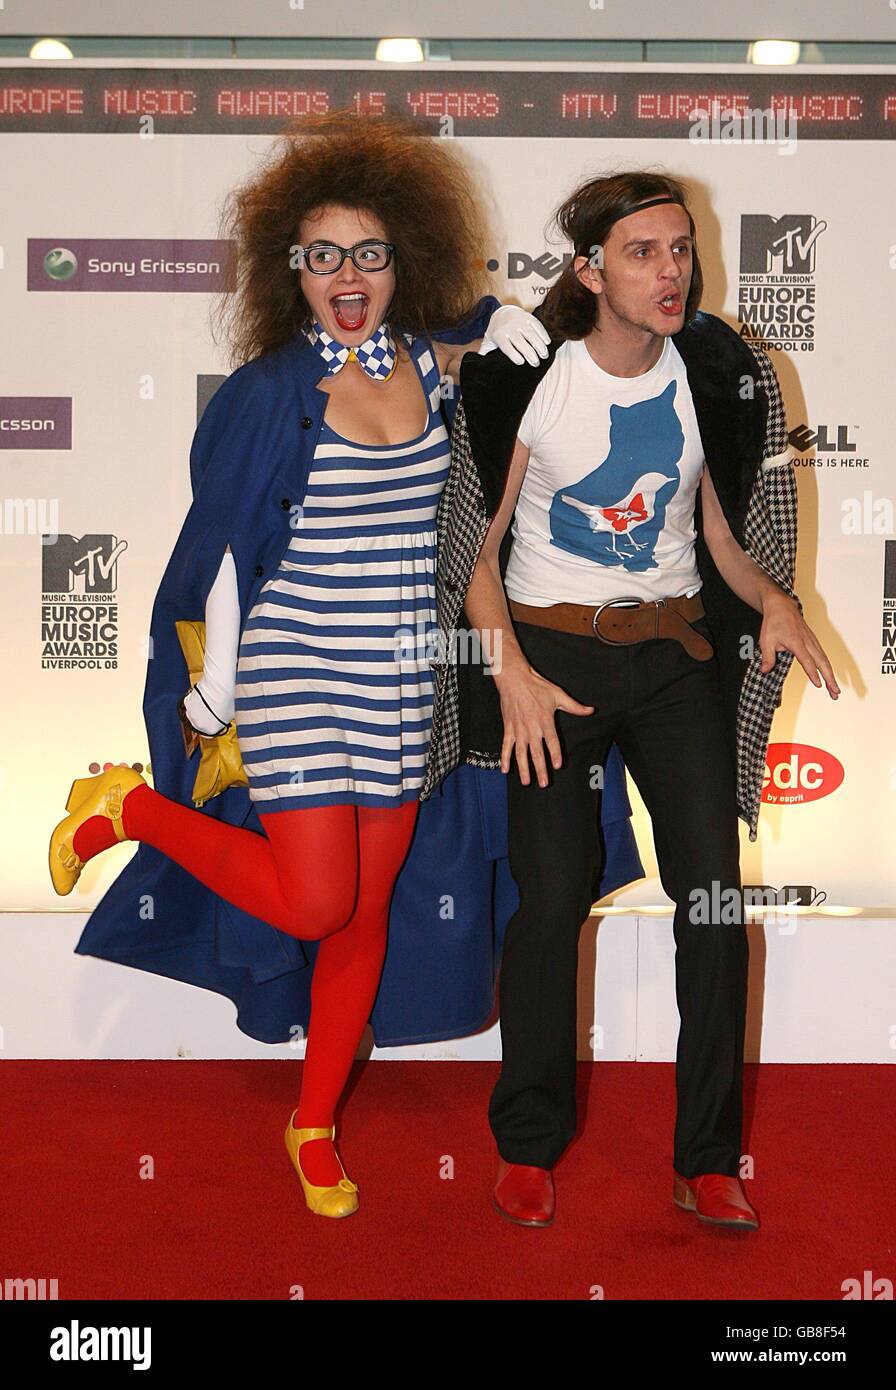 Elvir Lakovic (right) and Mirela Lakovic of Laka arrive for the 2008 MTV Europe Music Video Awards at the Echo Arena, Liverpool. Stock Photo